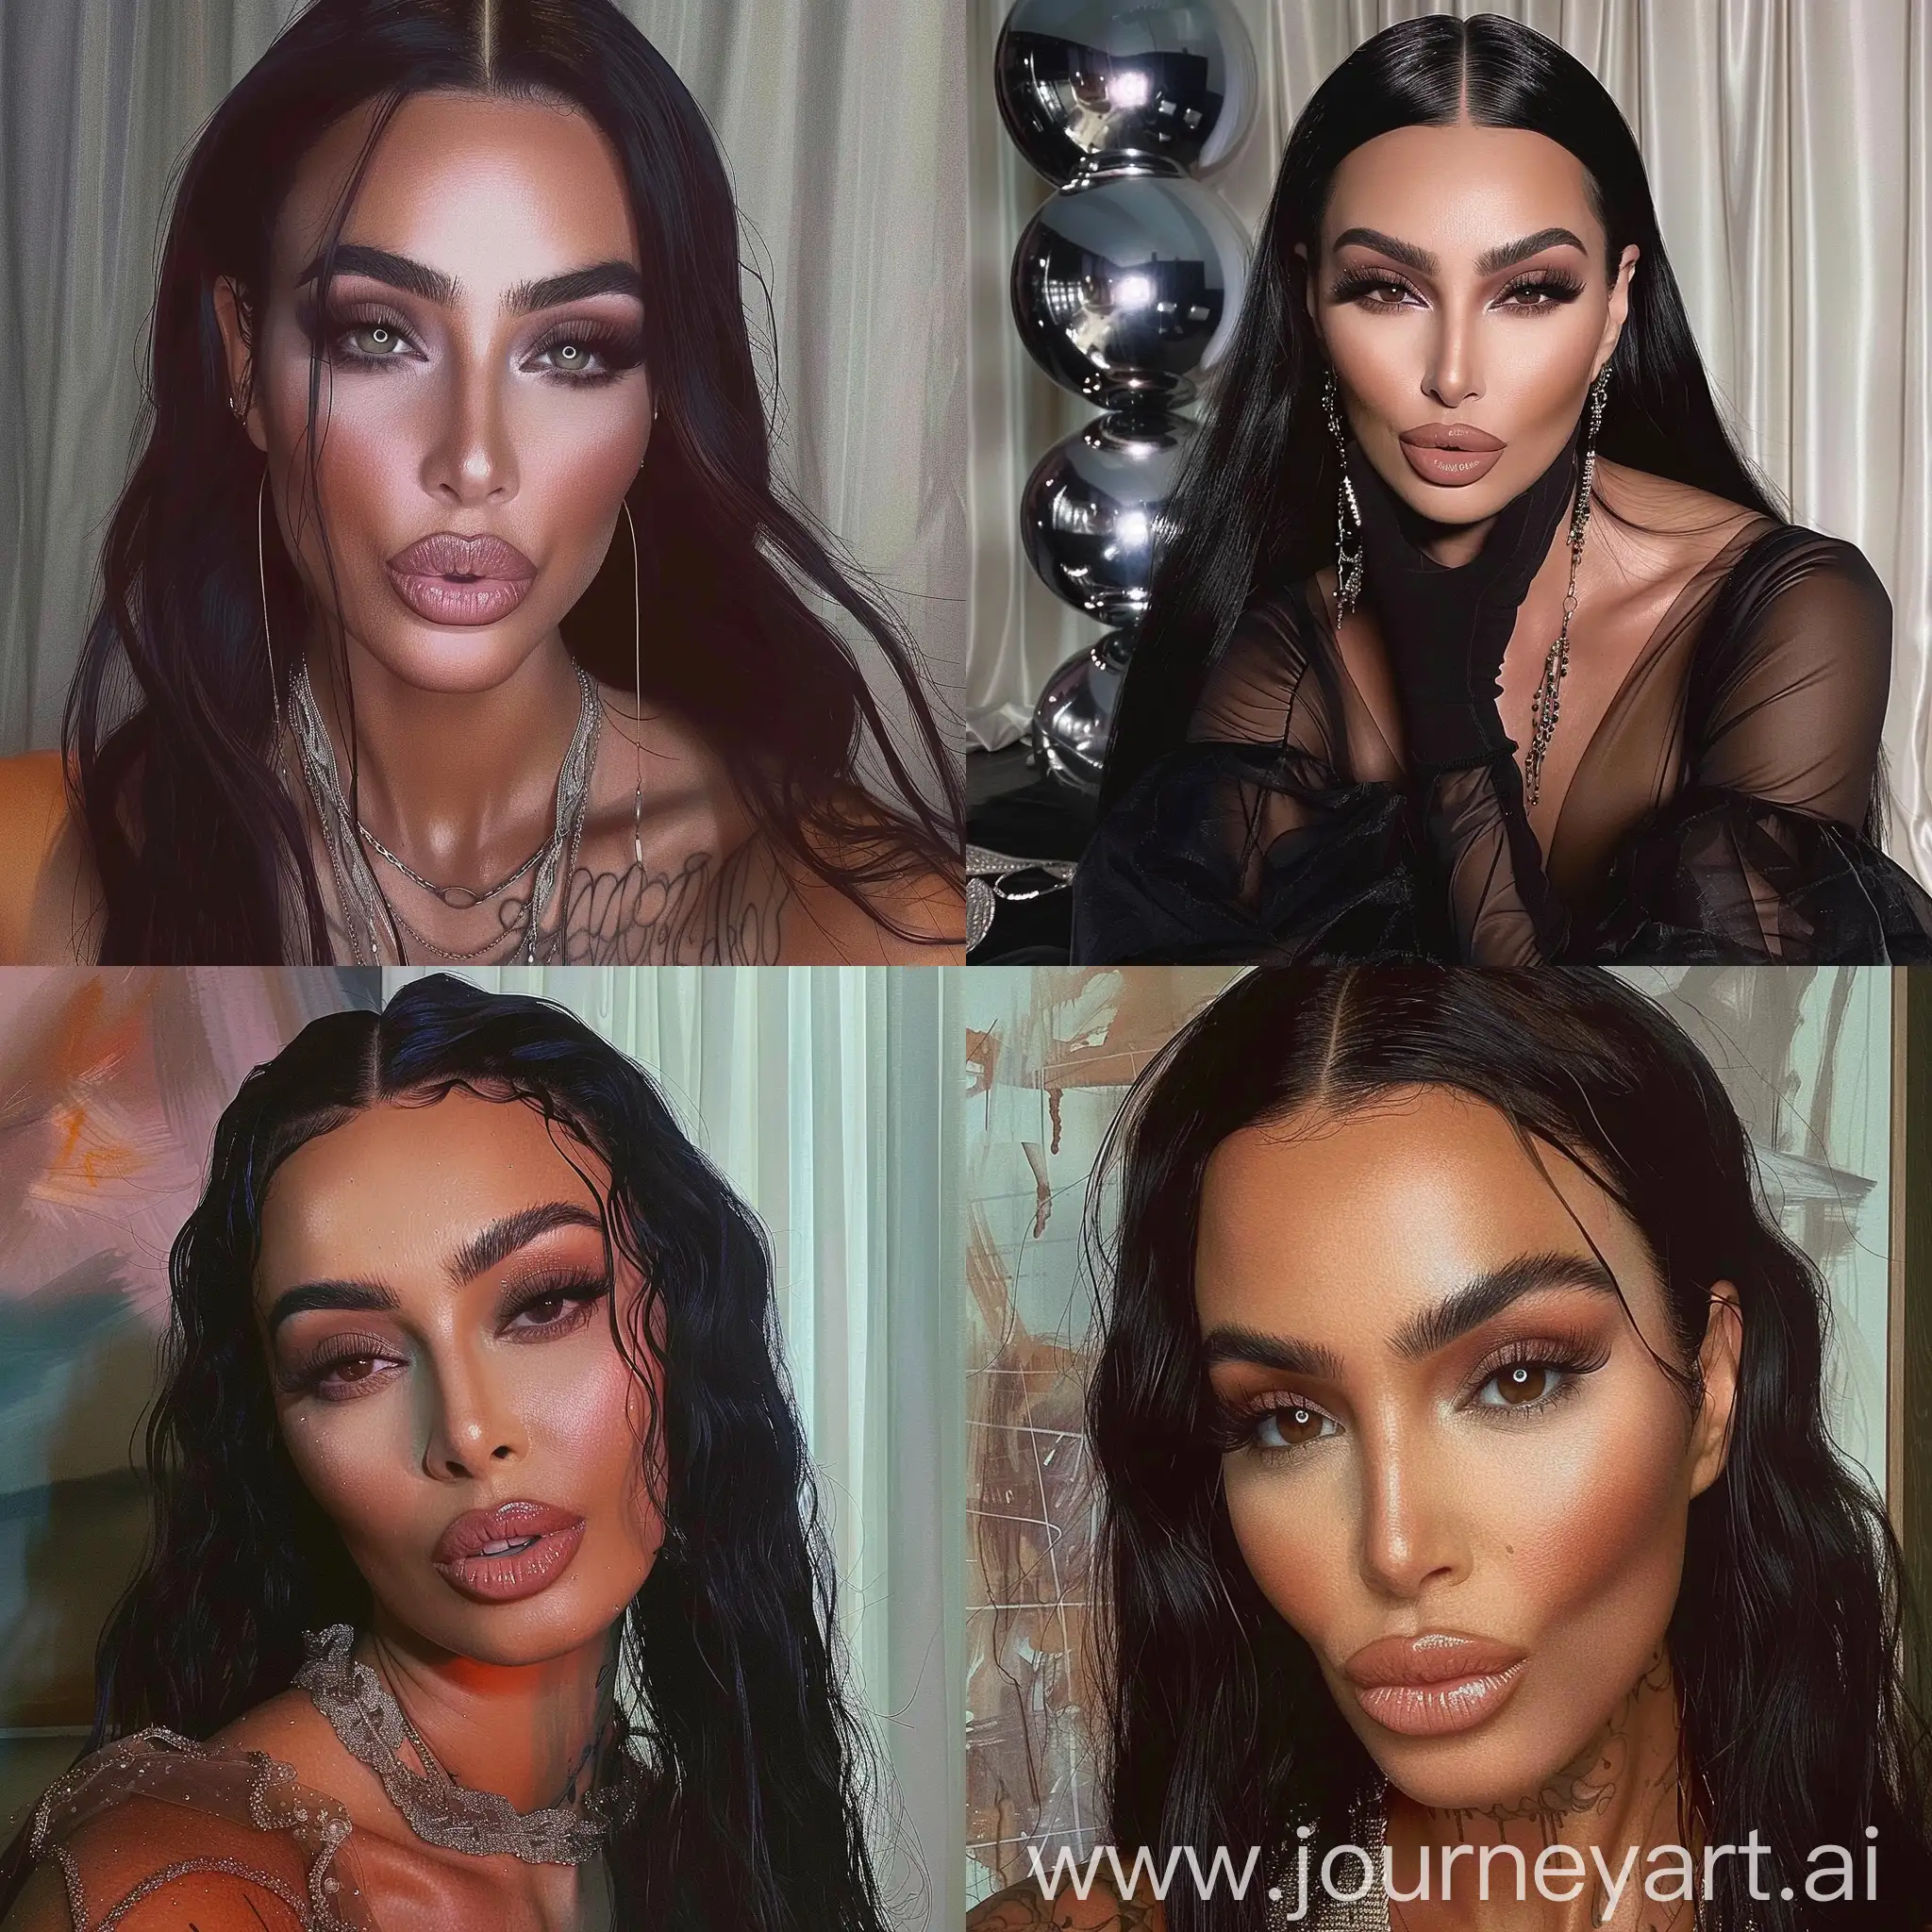 Kim-Kardashian-Aesthetic-Instagram-Portrait-with-Glamorous-Style